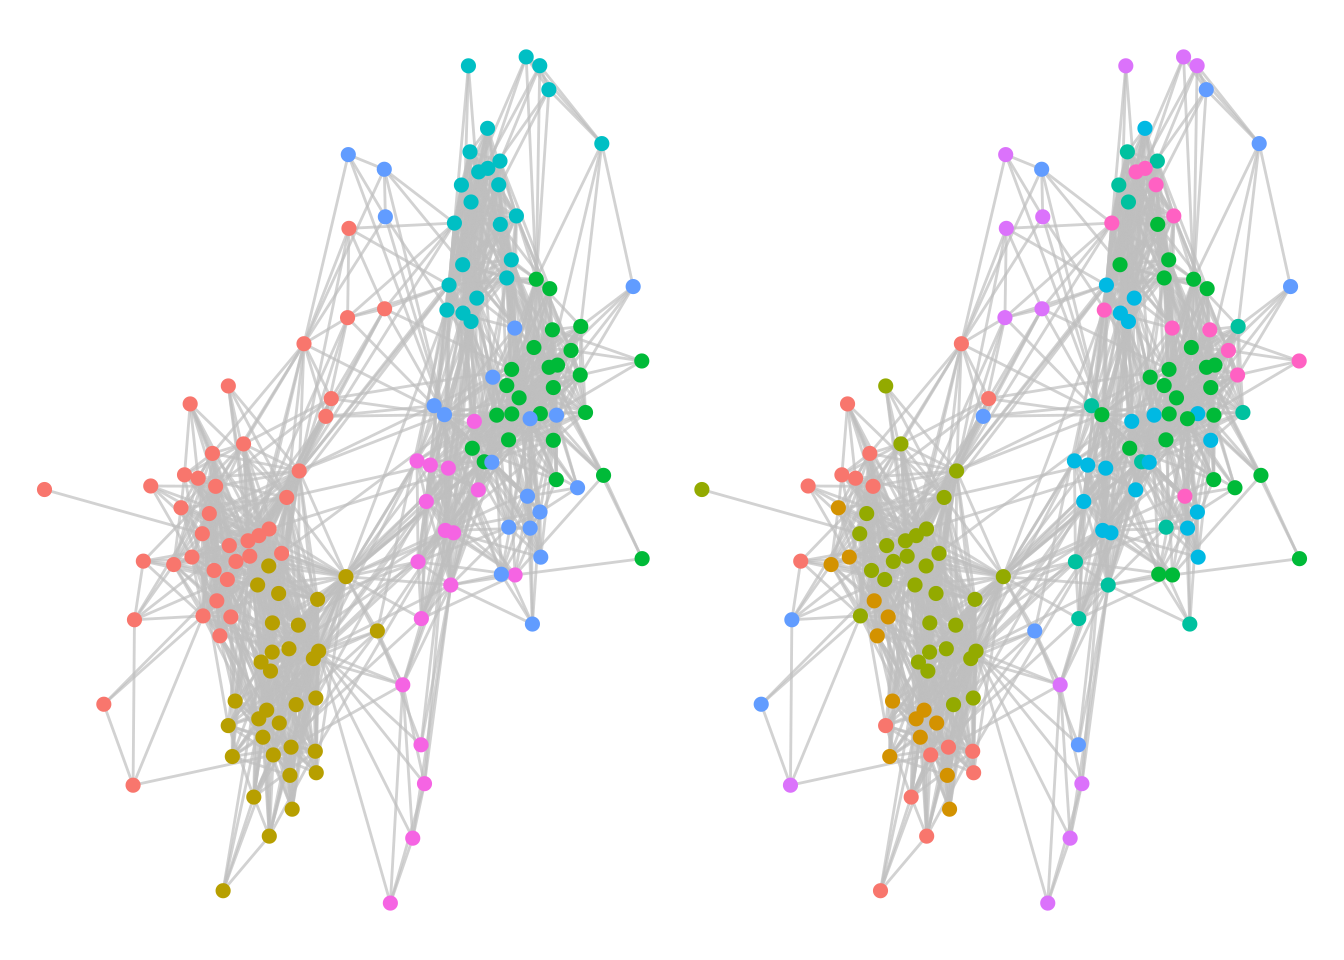 Optimal Louvain communities in the Facebook schoolfriends graph (left) versus ground truth class communities (right)